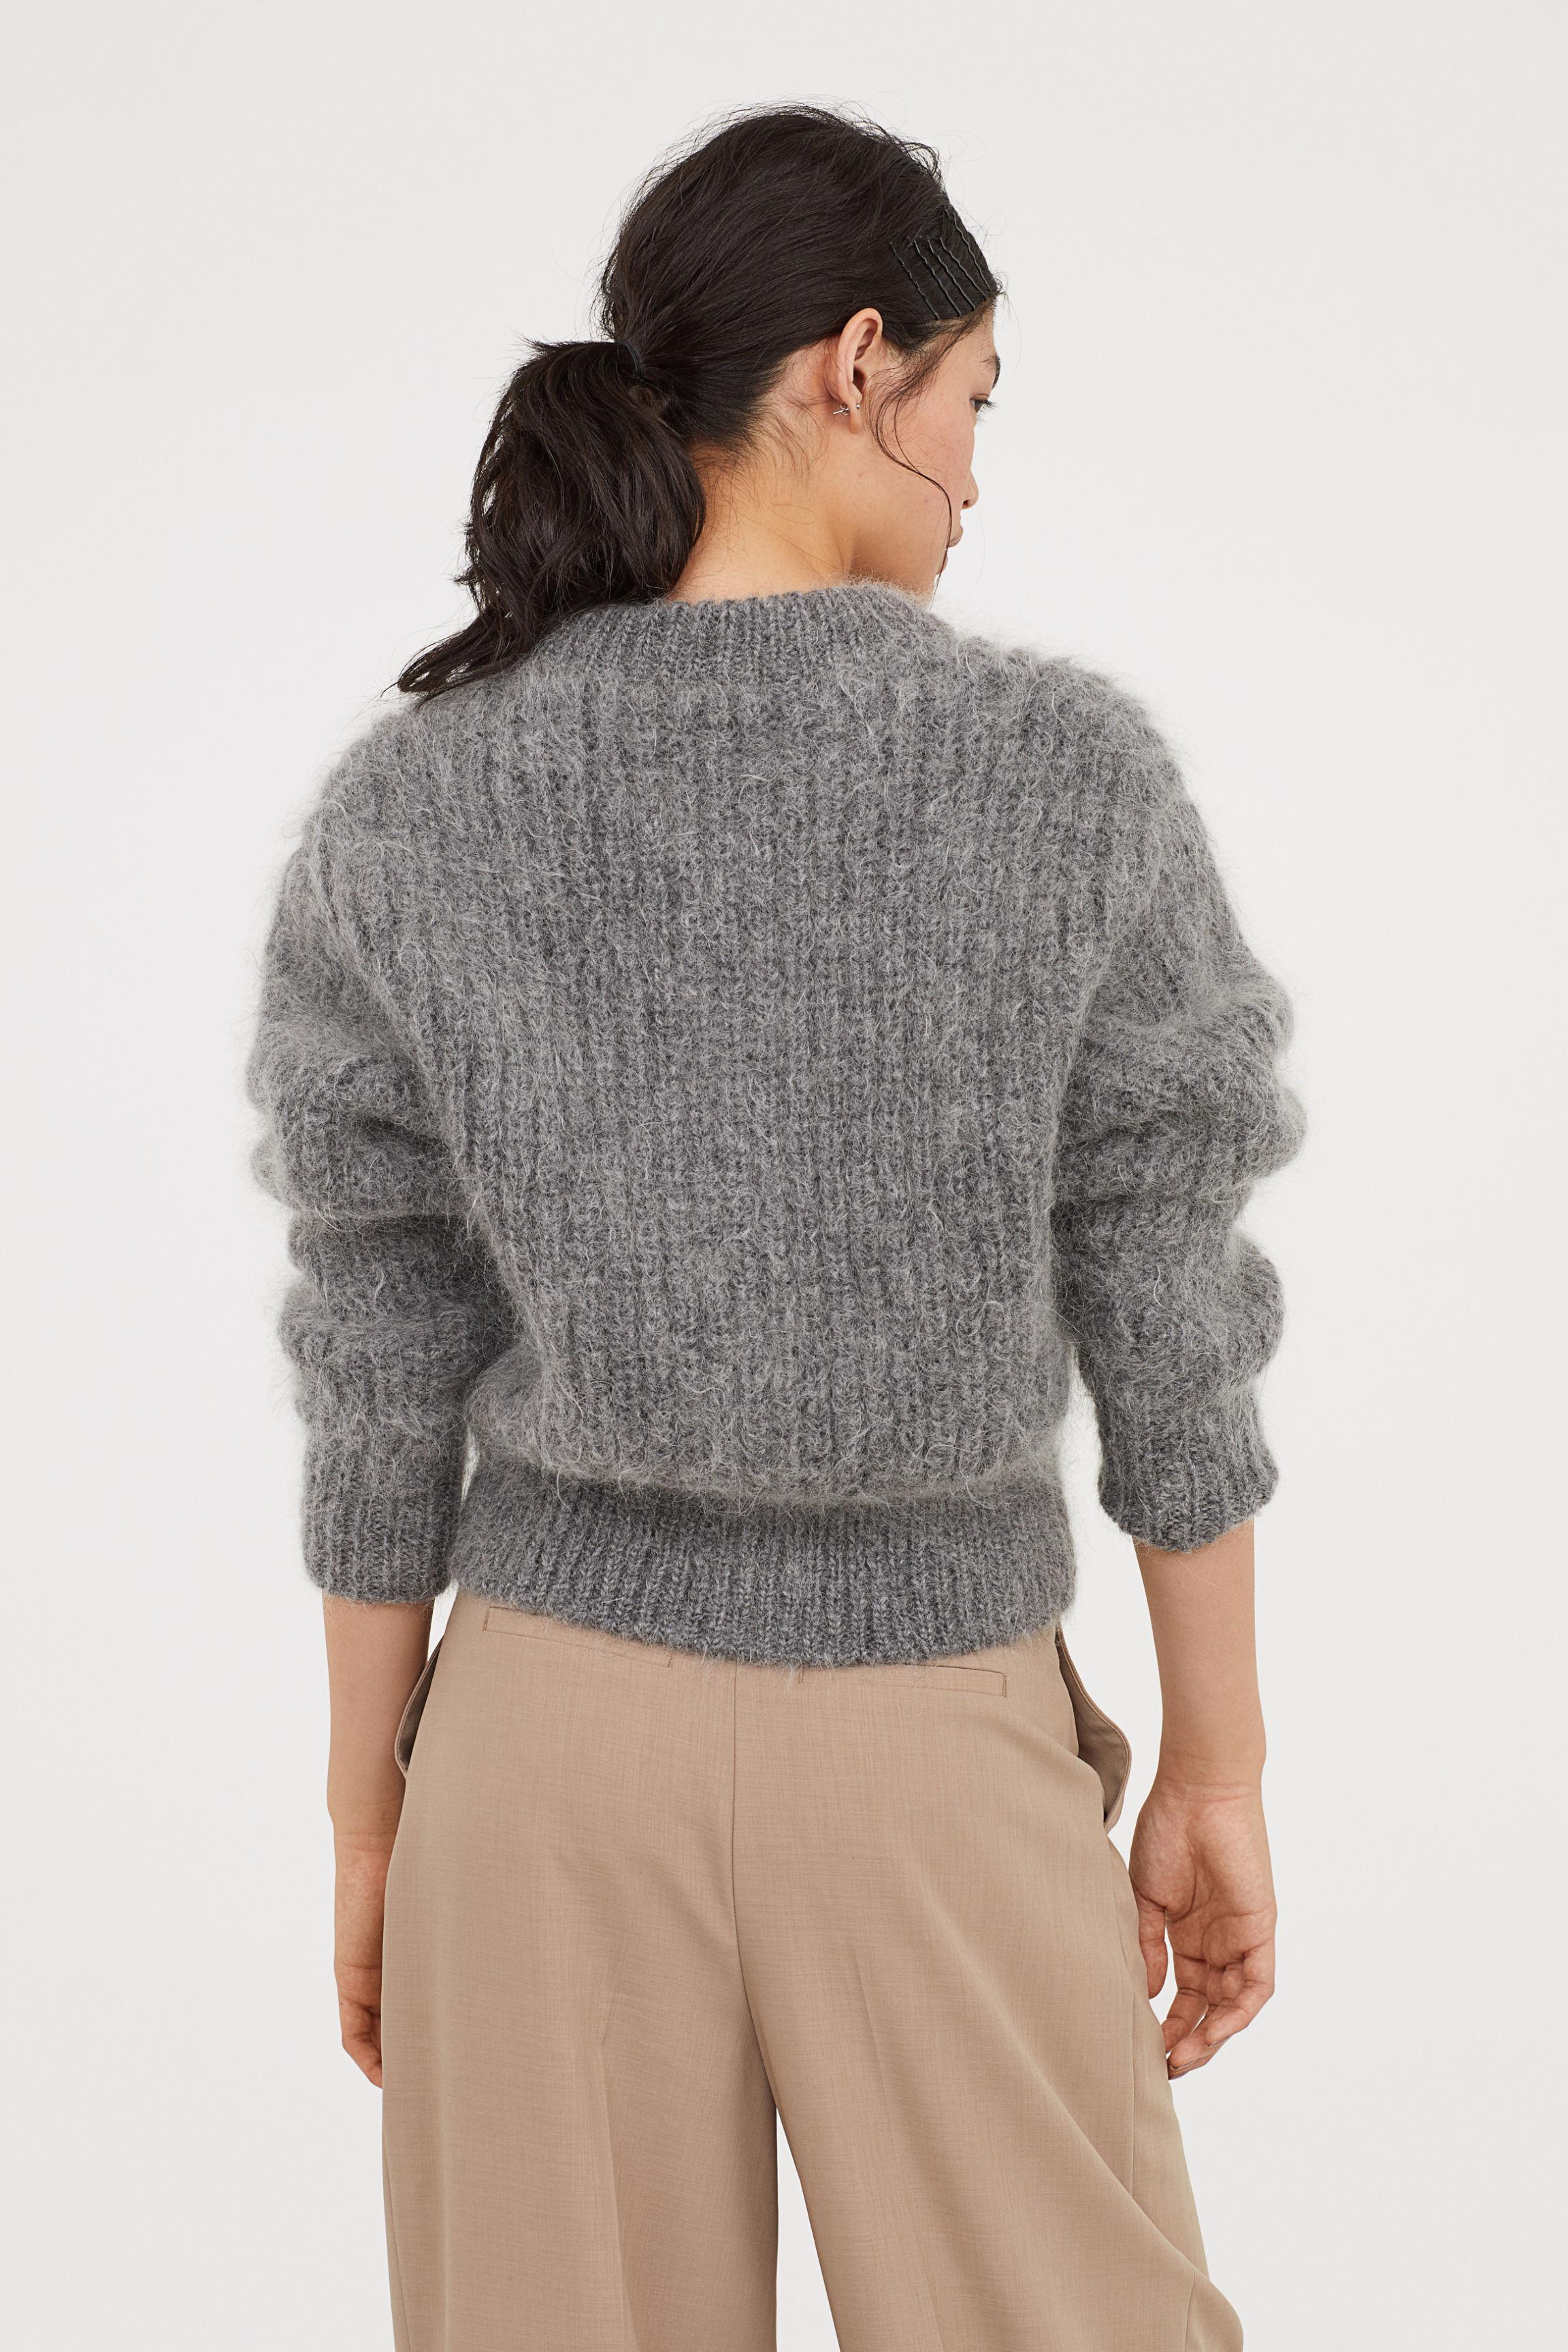 H&M Wool-blend Cardigan in Gray Melange (Gray) - Lyst